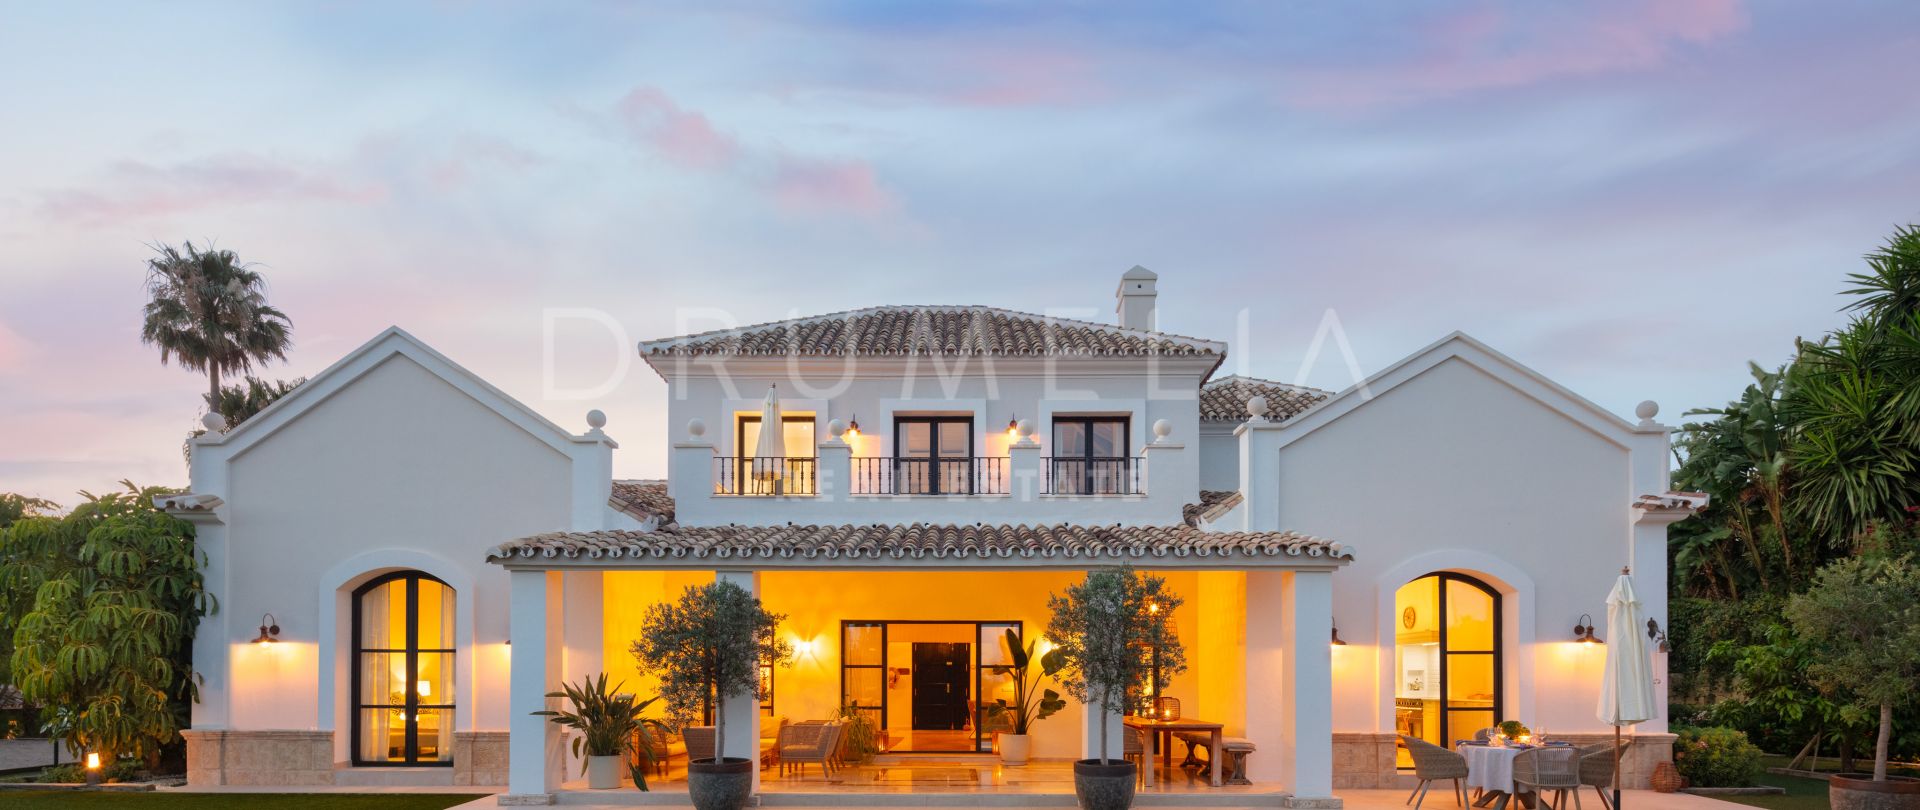 Marvellous Mediterranean villa with sea view and boho chic interior, New Golden Mile, Estepona